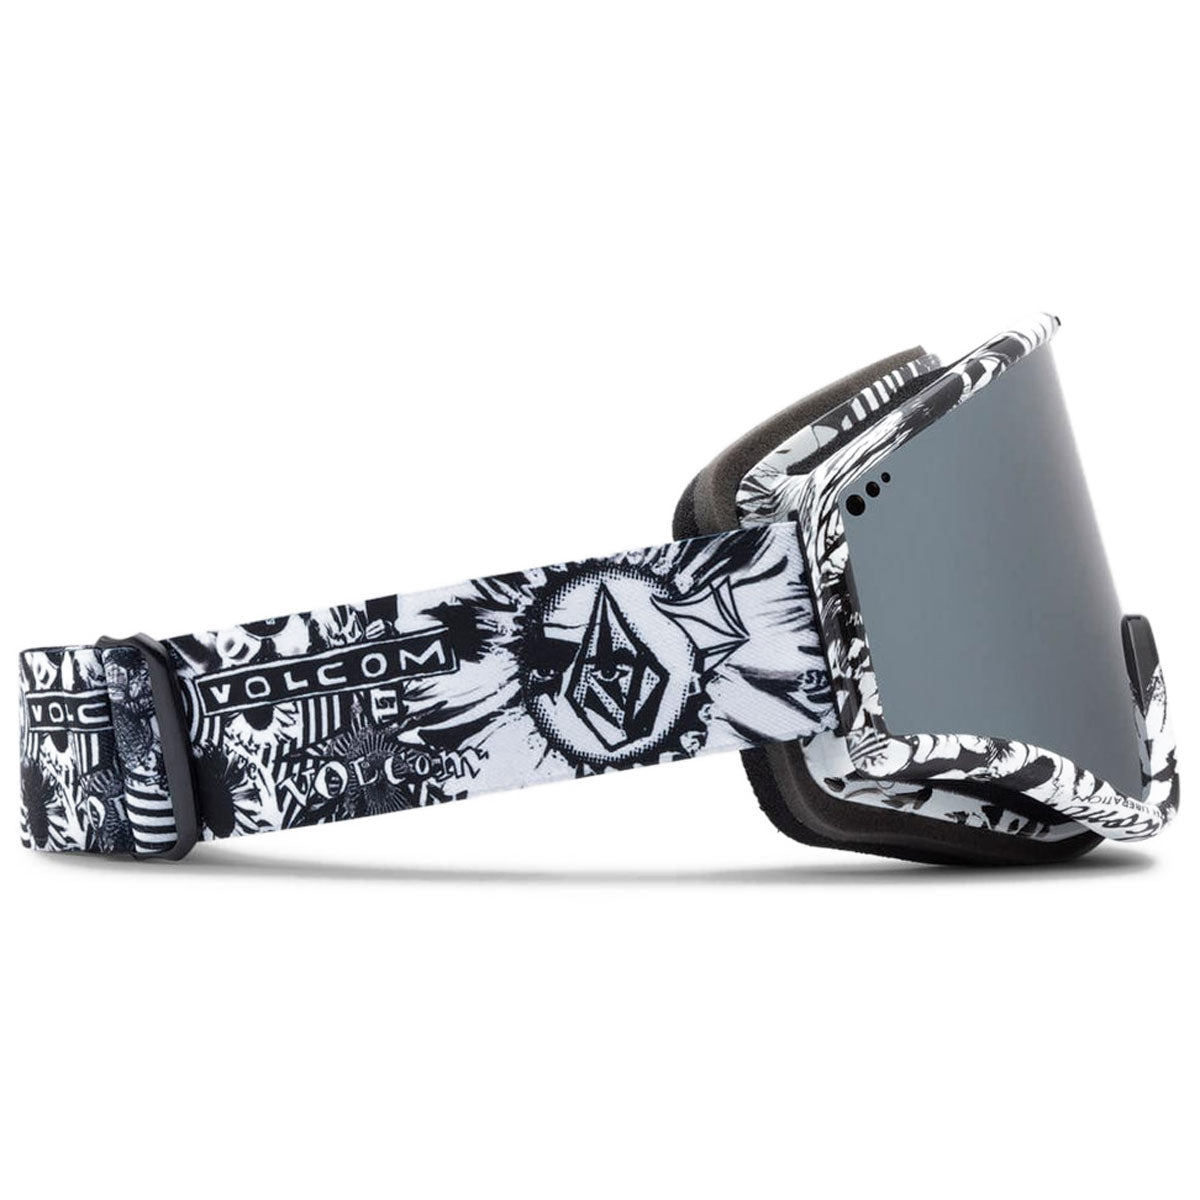 Volcom Yae Snowboard Goggles - OP Art/Silver Chrome image 2